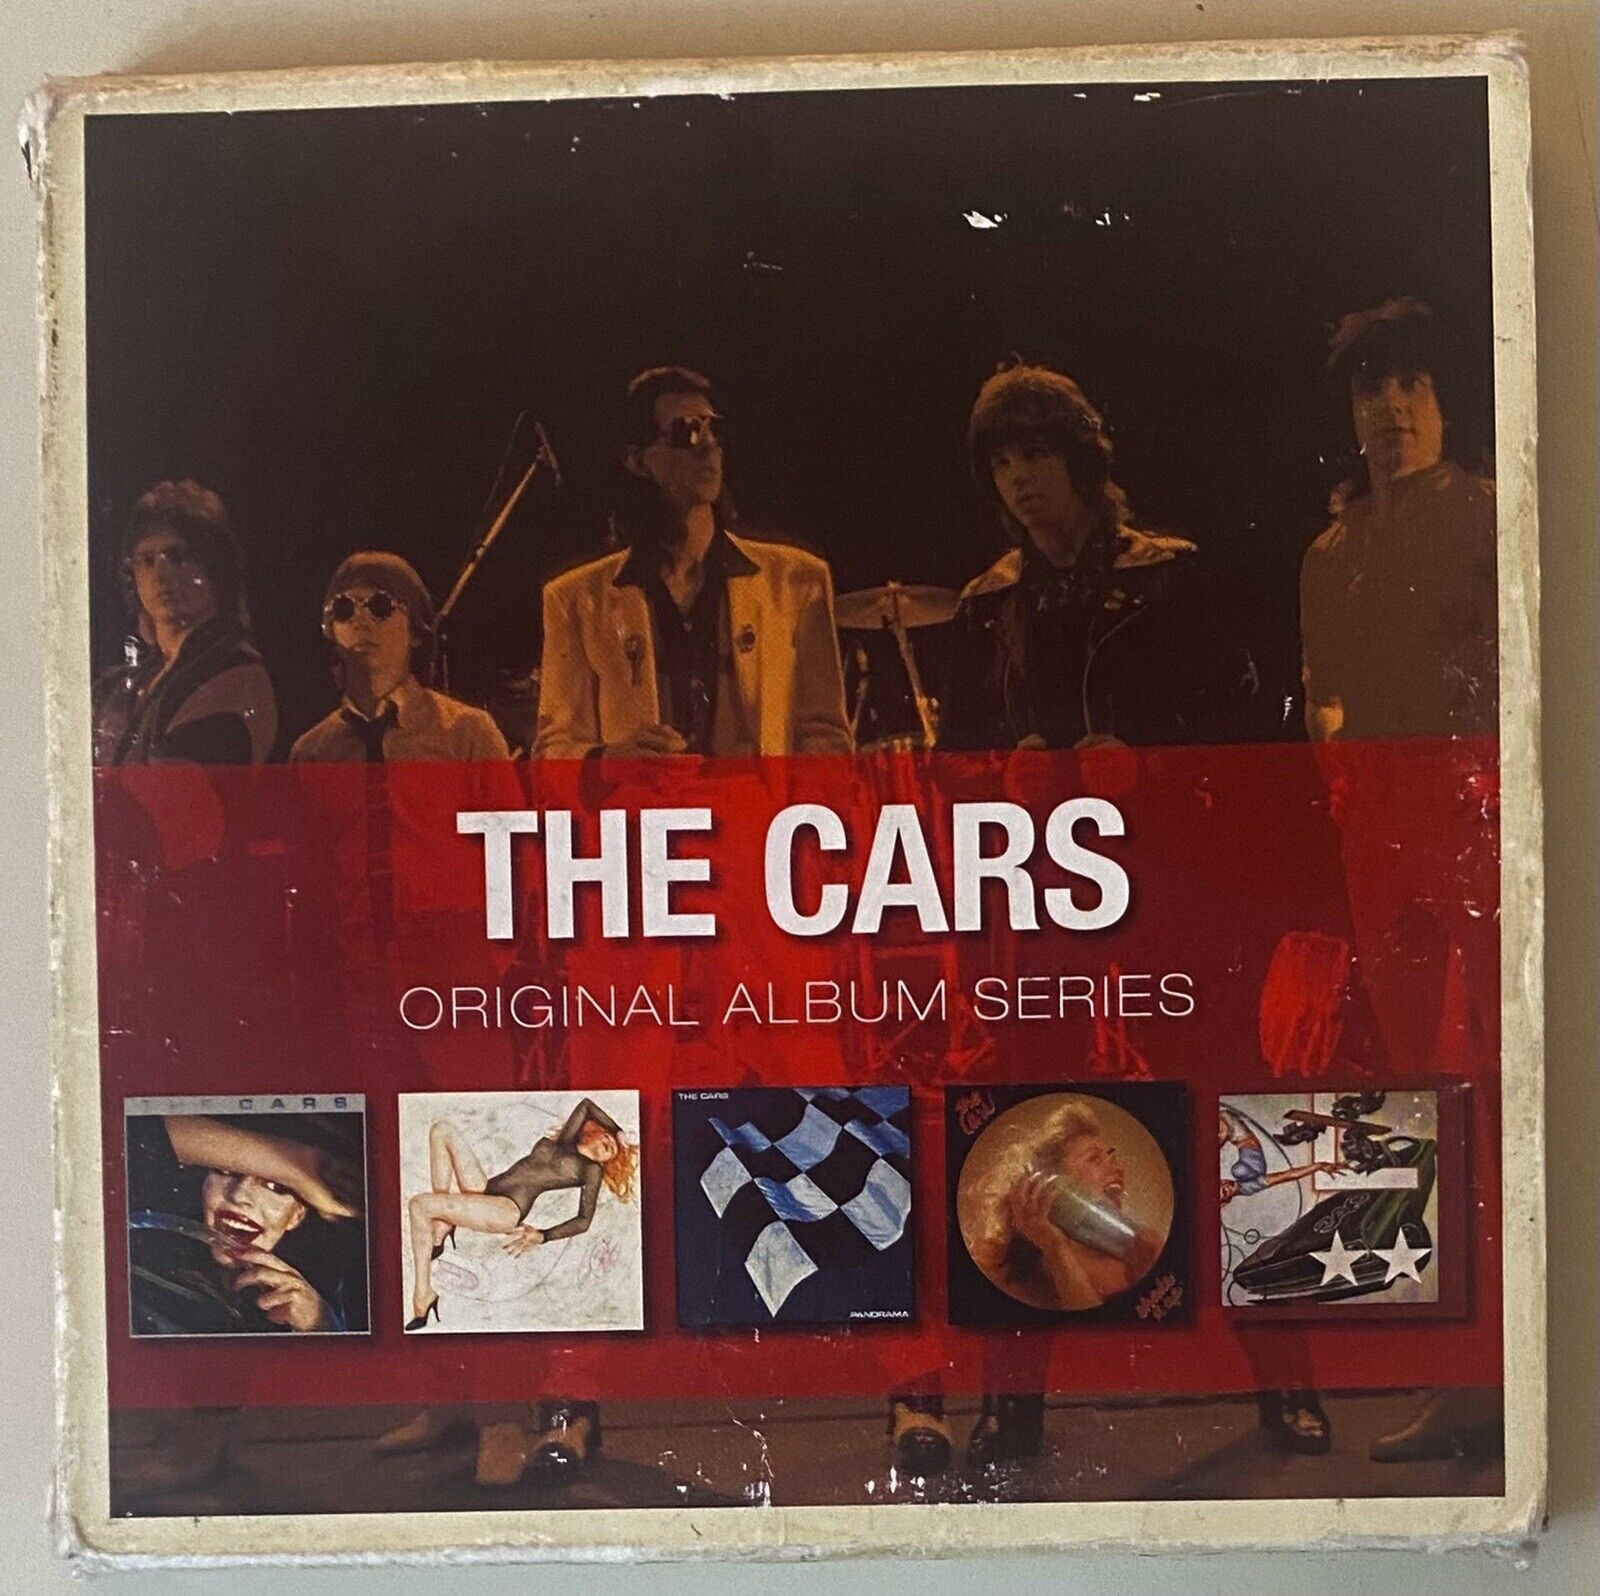 The Cars - Original Album Series CD Boxed Set, Germany - Import